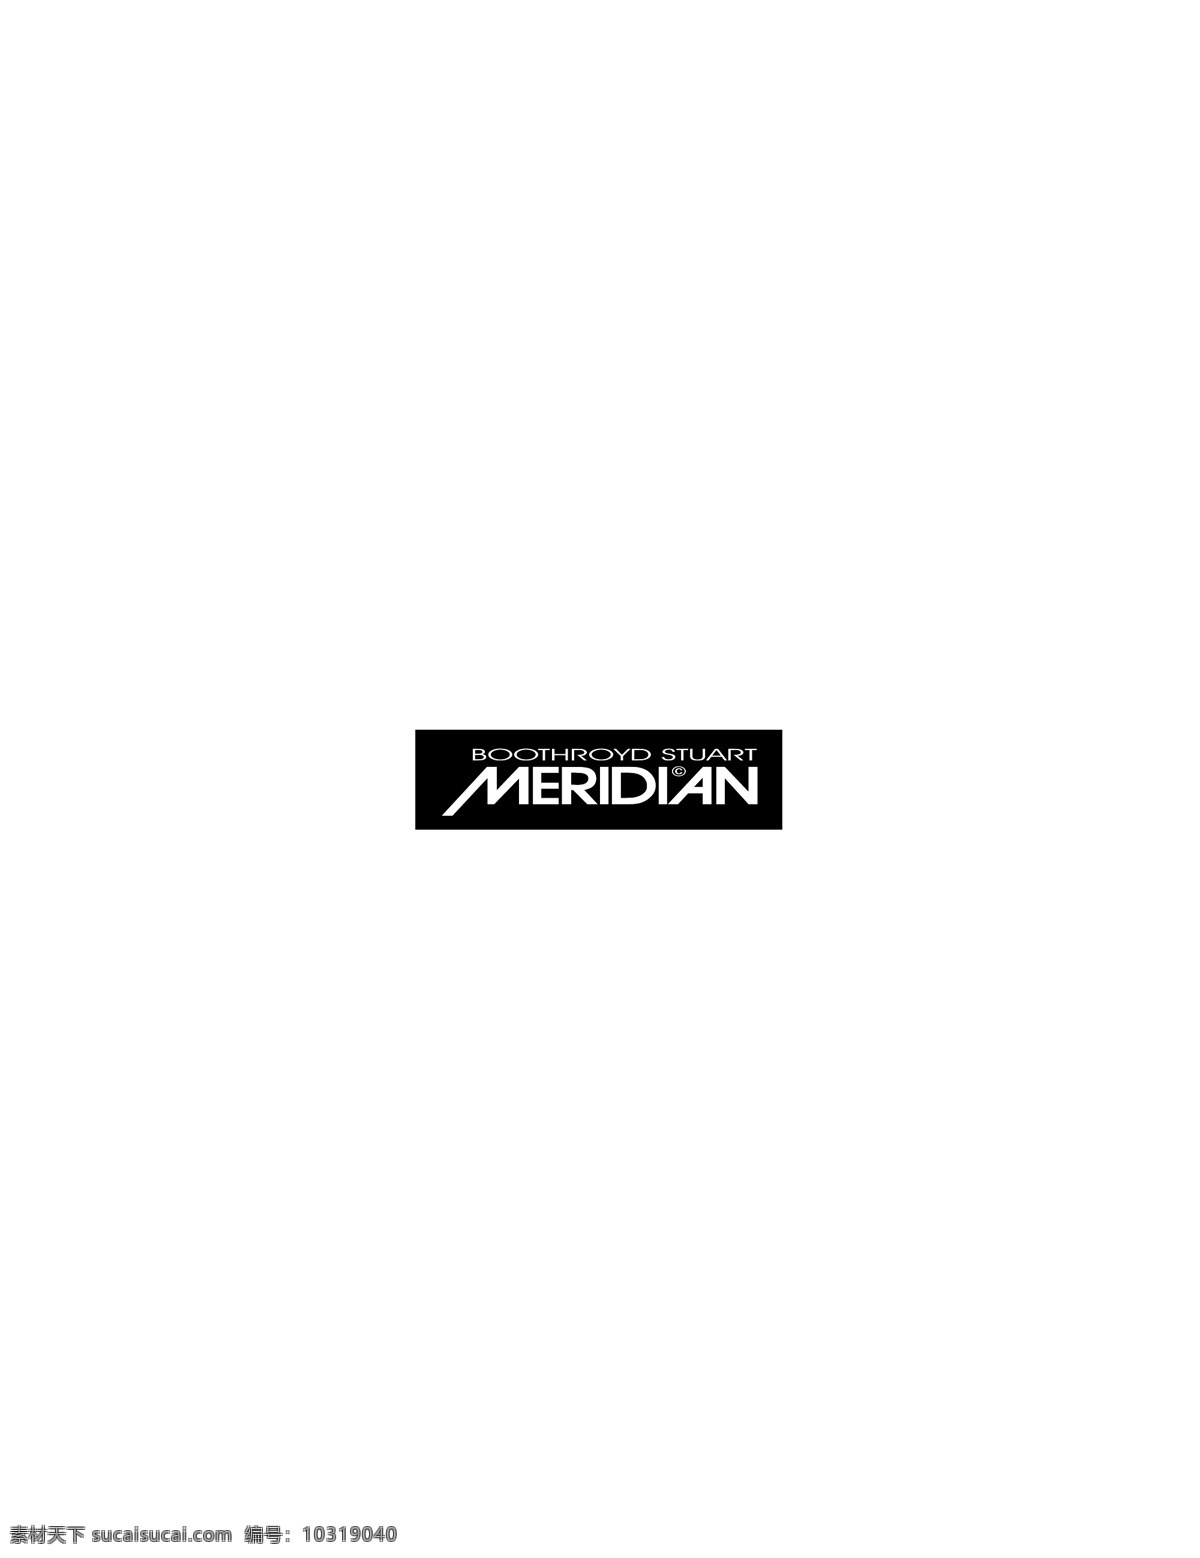 logo大全 logo 设计欣赏 商业矢量 矢量下载 meridian 传统 企业 标志设计 欣赏 网页矢量 矢量图 其他矢量图